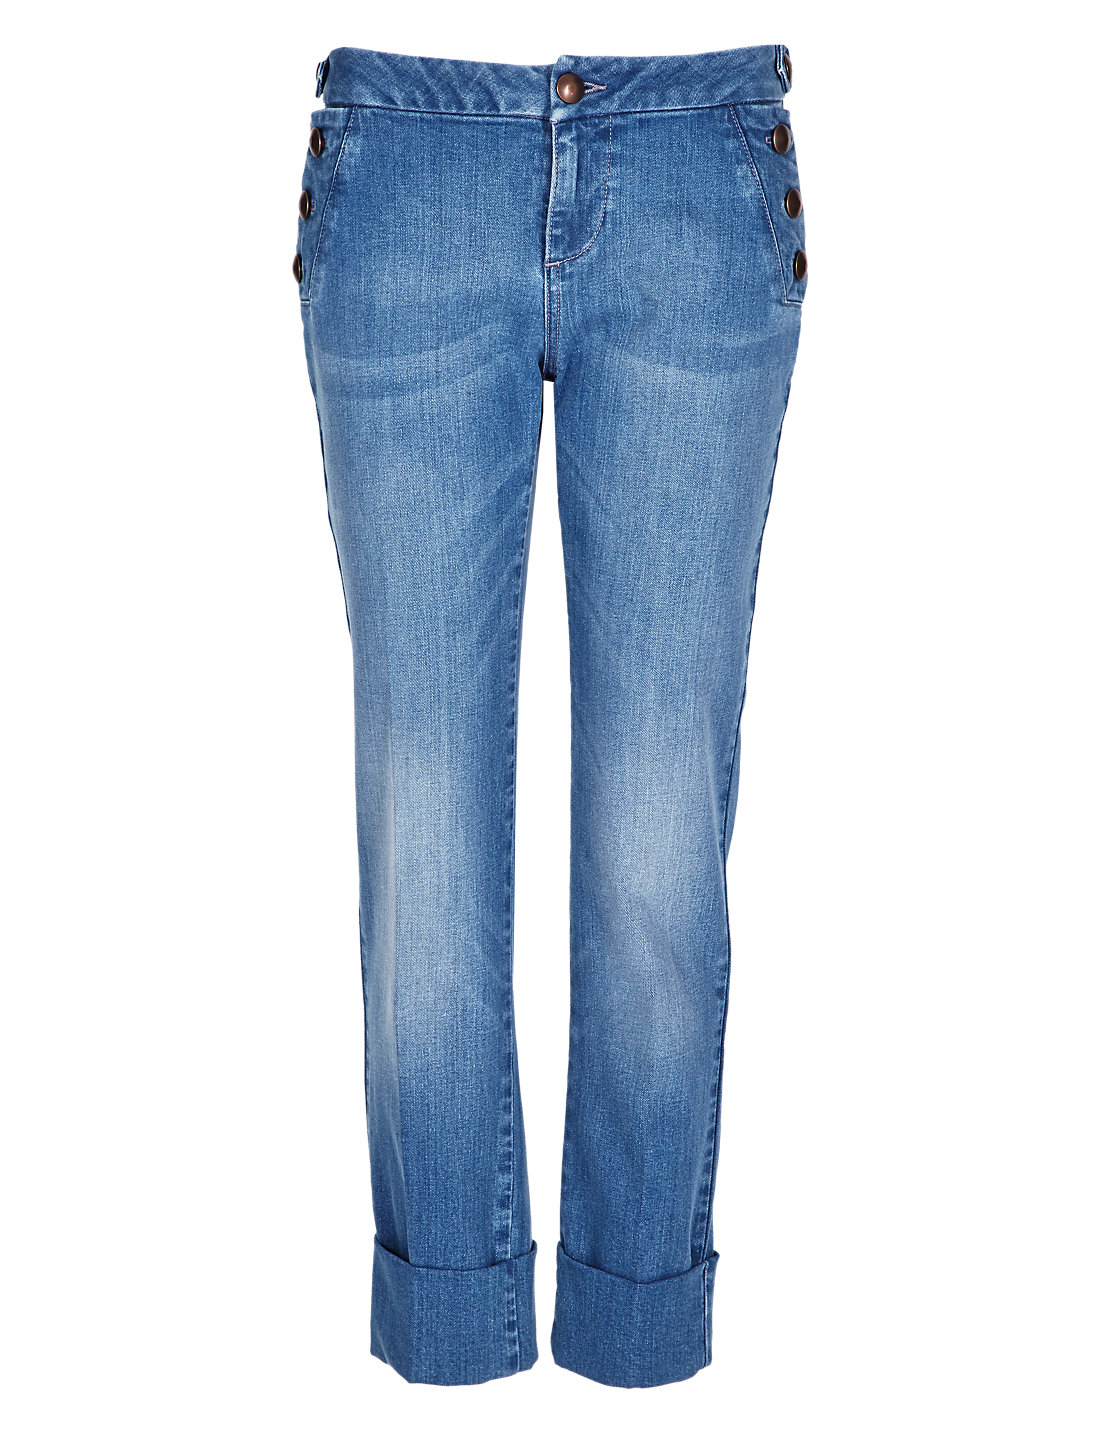 Marks and Spencer - - M&5 INDIGO Straight Leg Denim Jeans - Size 6 to 14